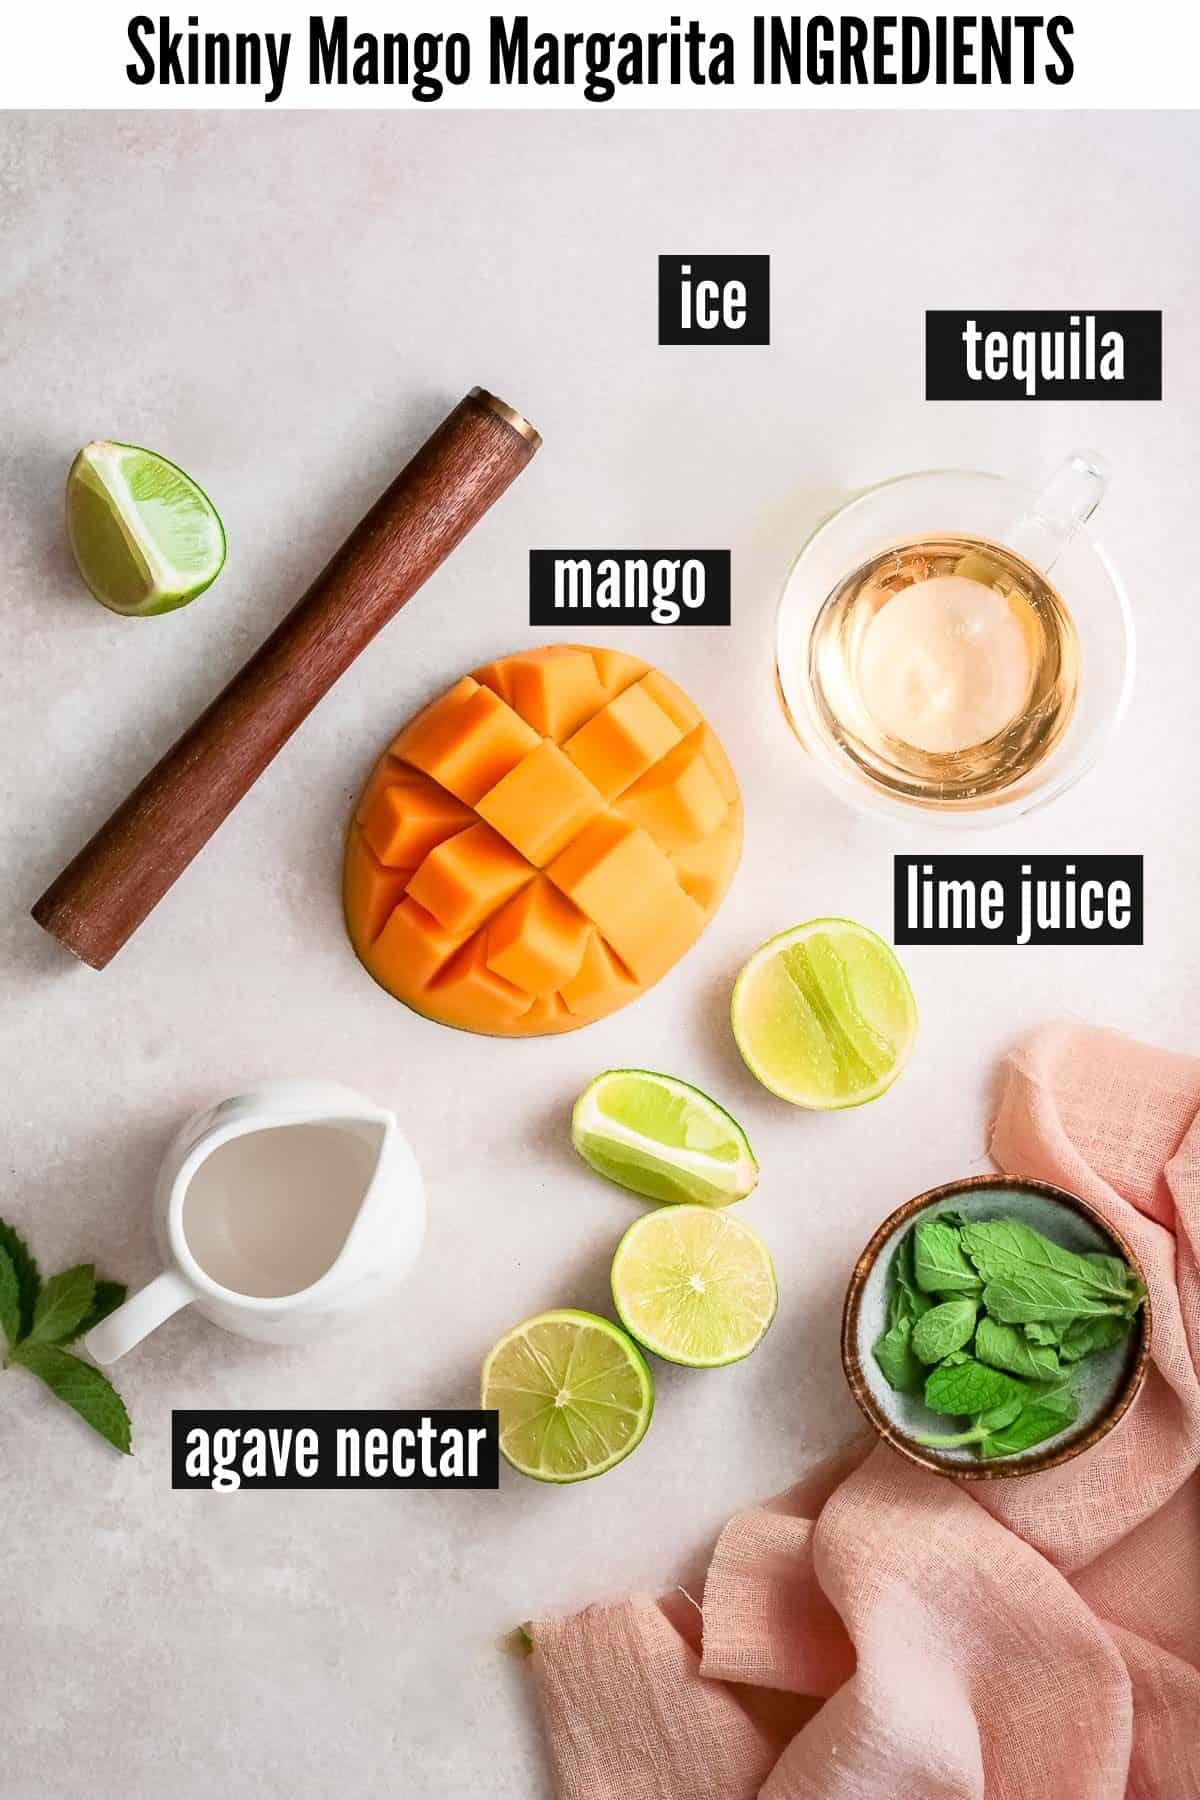 mango margarita labelled ingredients